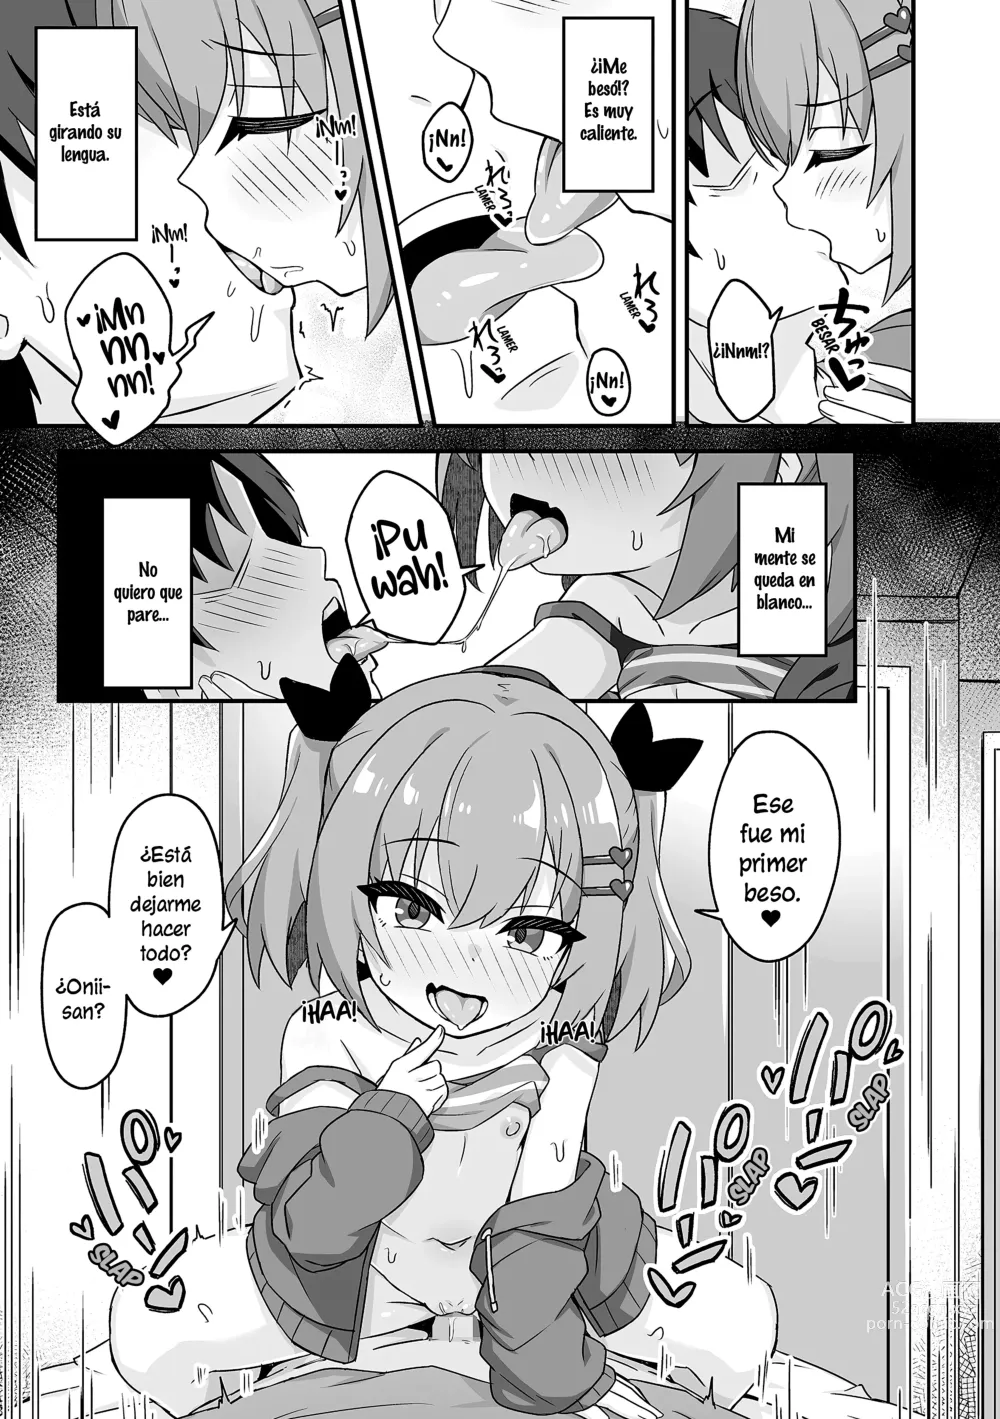 Page 9 of manga Interdependencia sexual con una niña fugitiva